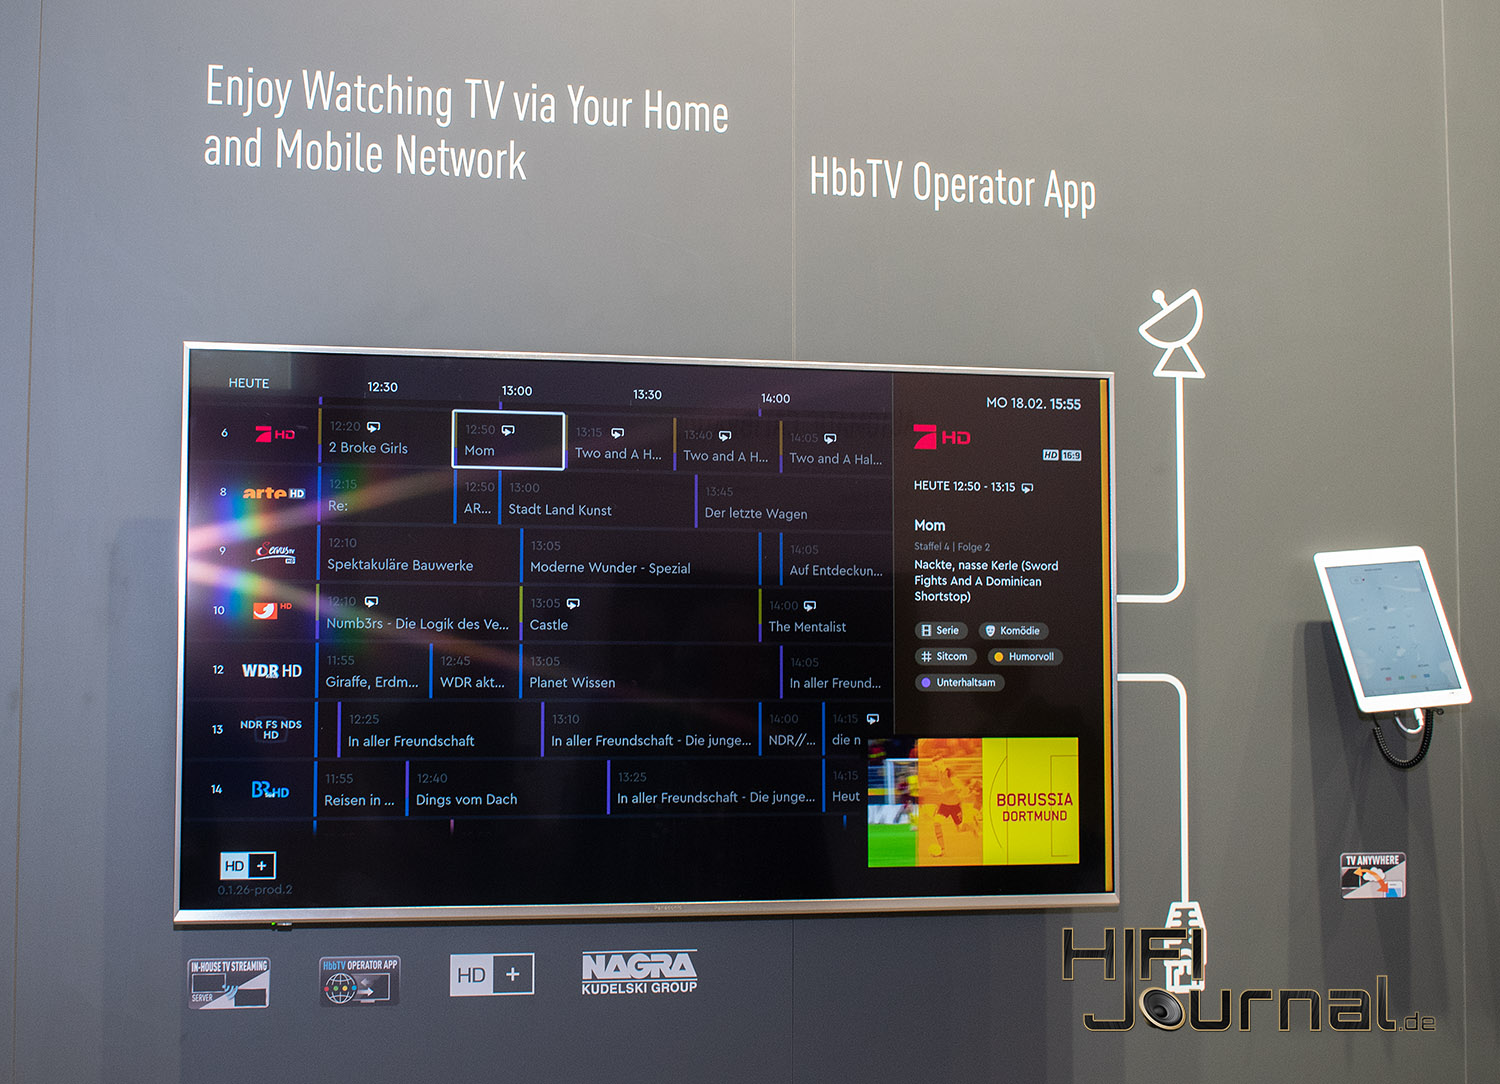 Panasonic HbbTV operator App